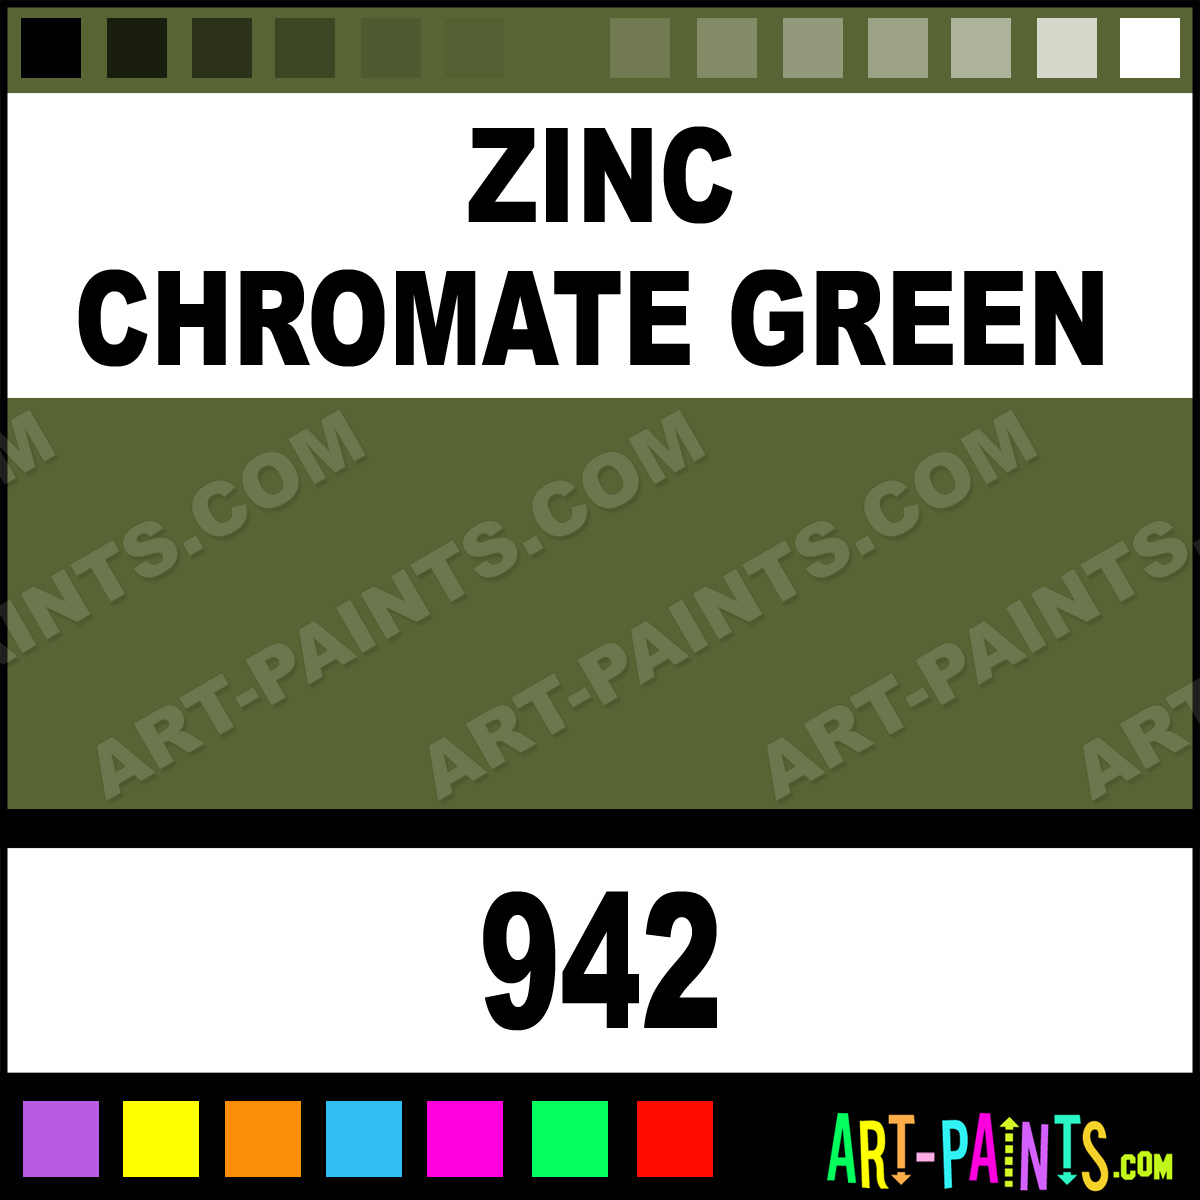 Zinc Chromate Green Primers Spray Paints - 942 - Zinc Chromate